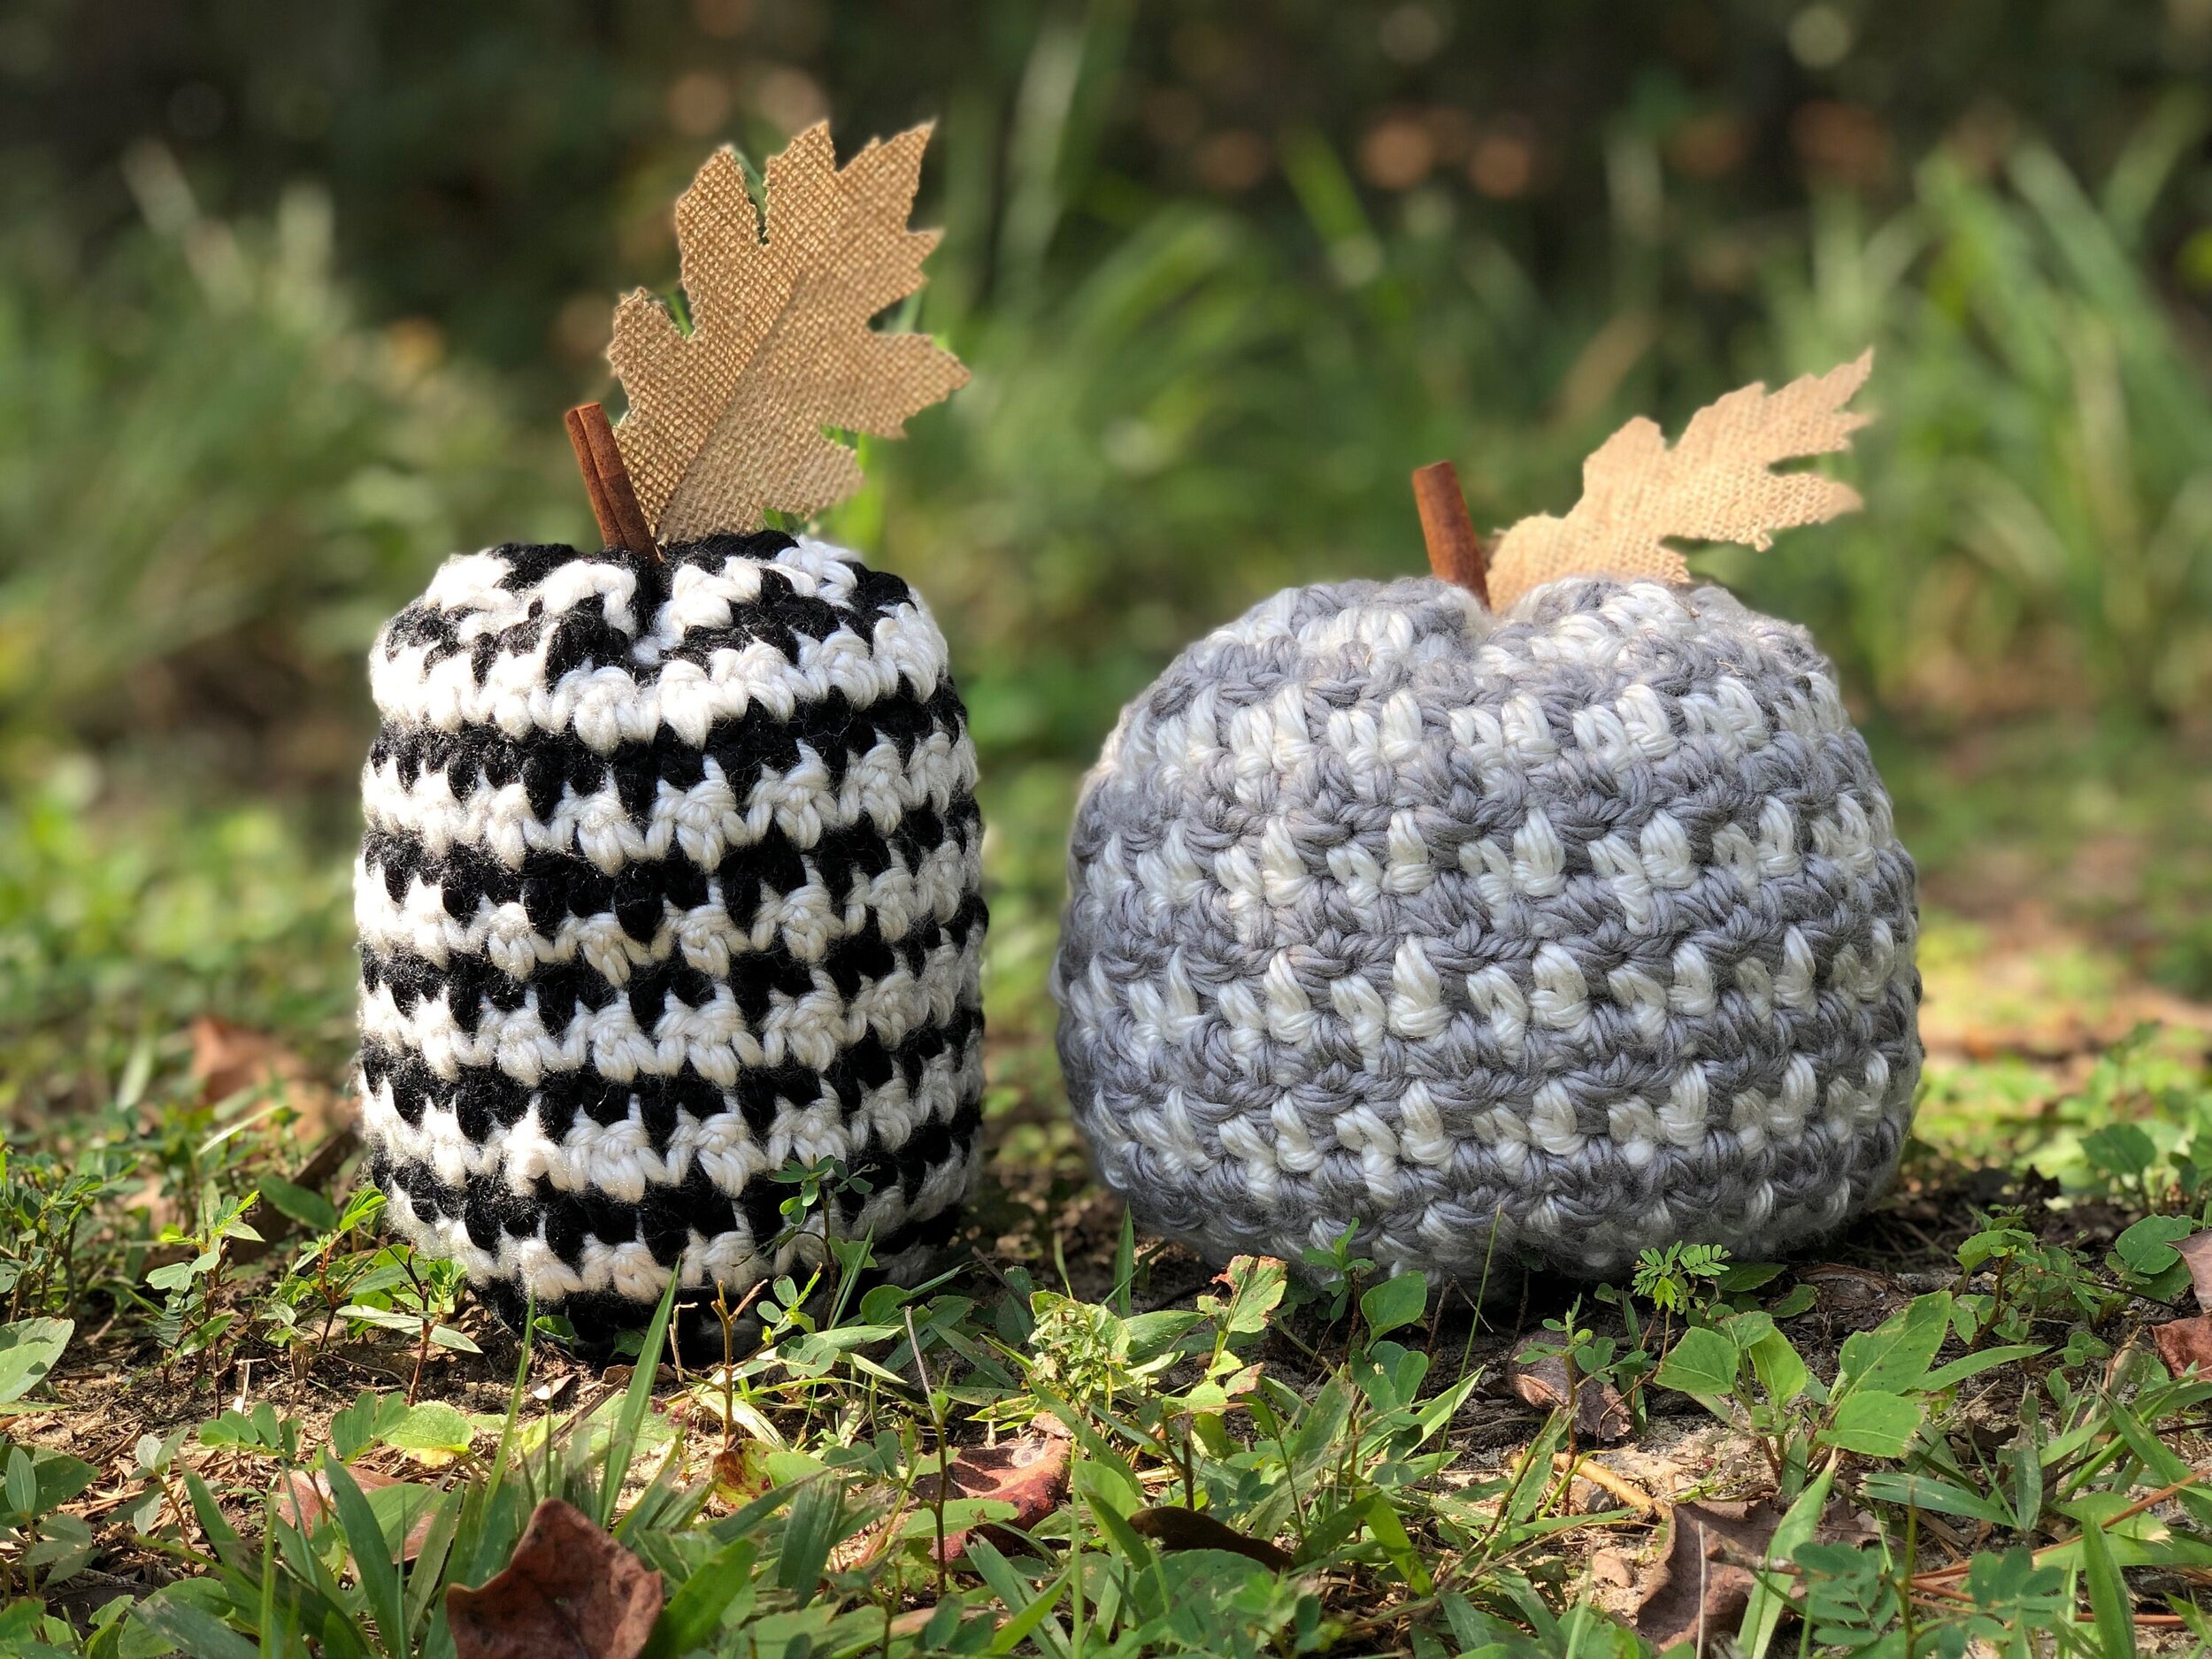 Bob's Burgers Louise Belcher Inspired Crochet Hat Pattern — Naturally Hooked